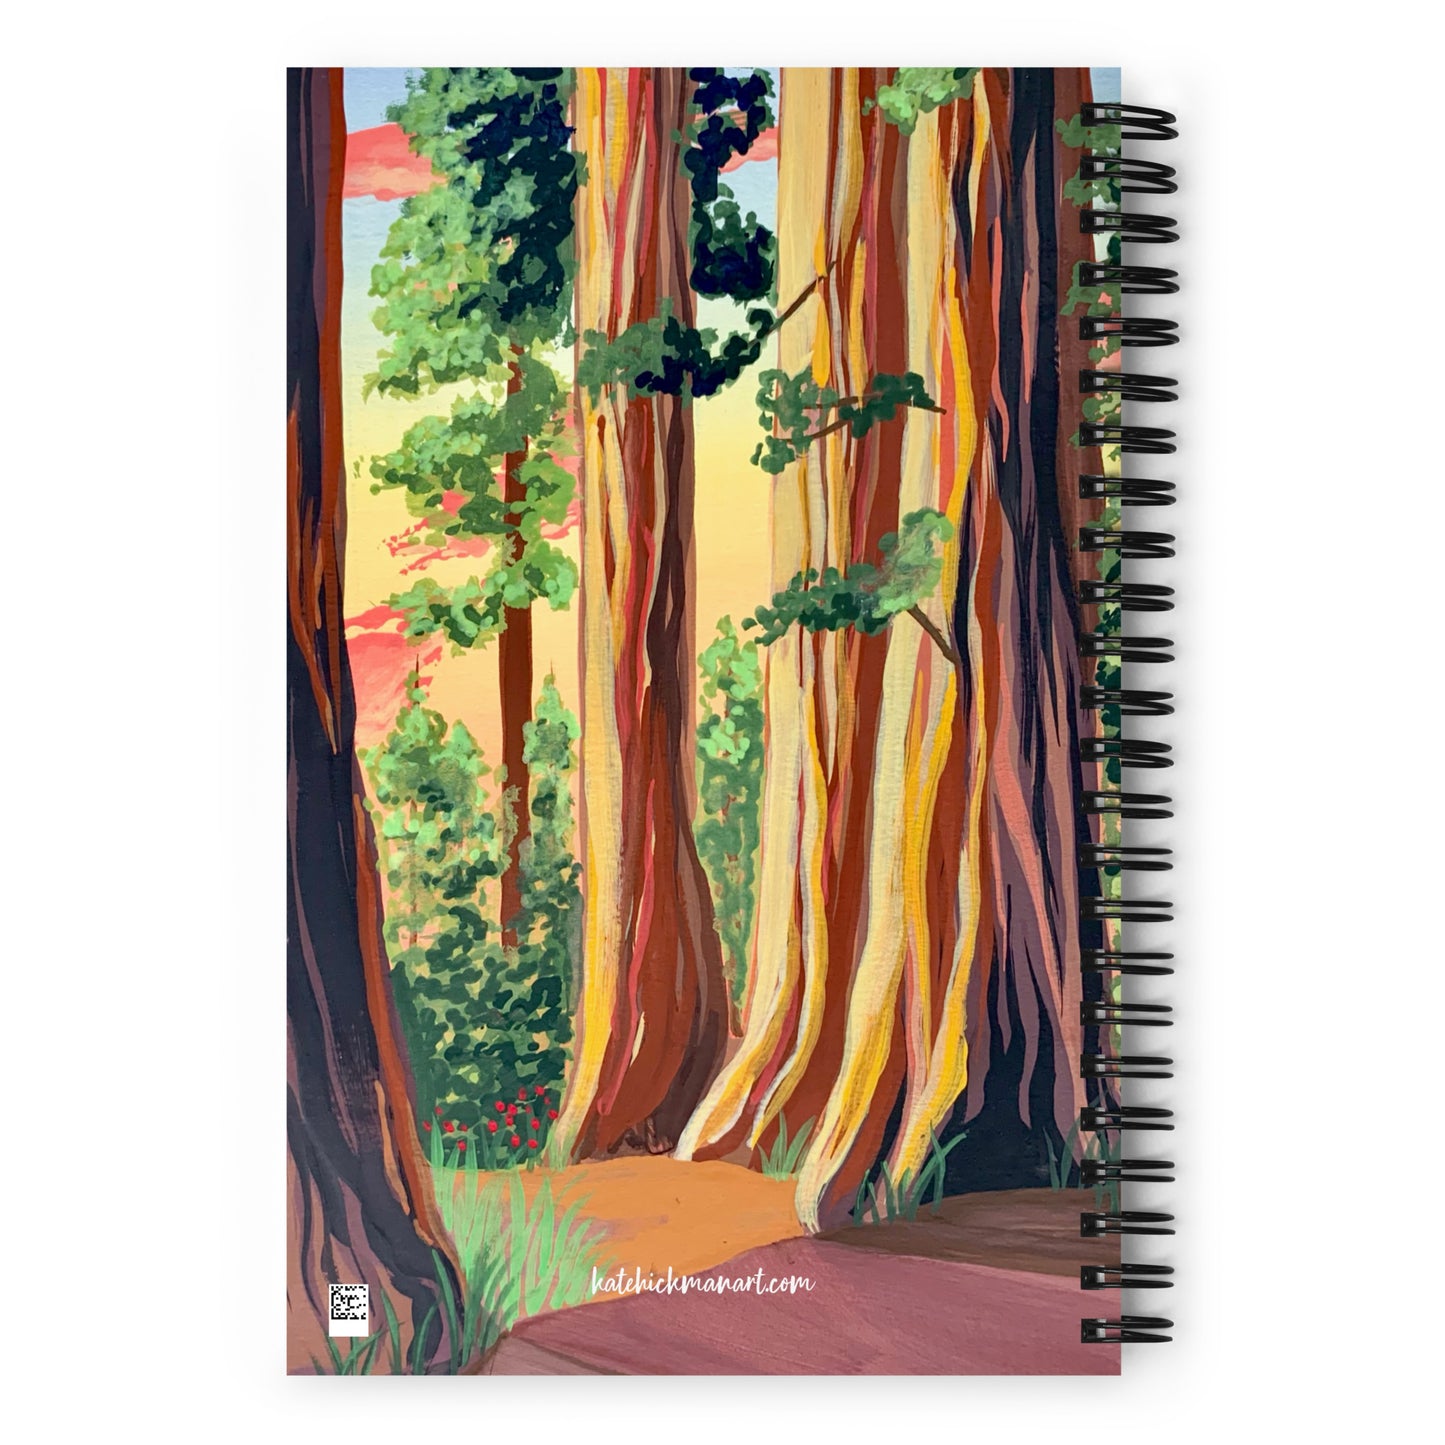 Redwoods National Park Notebook